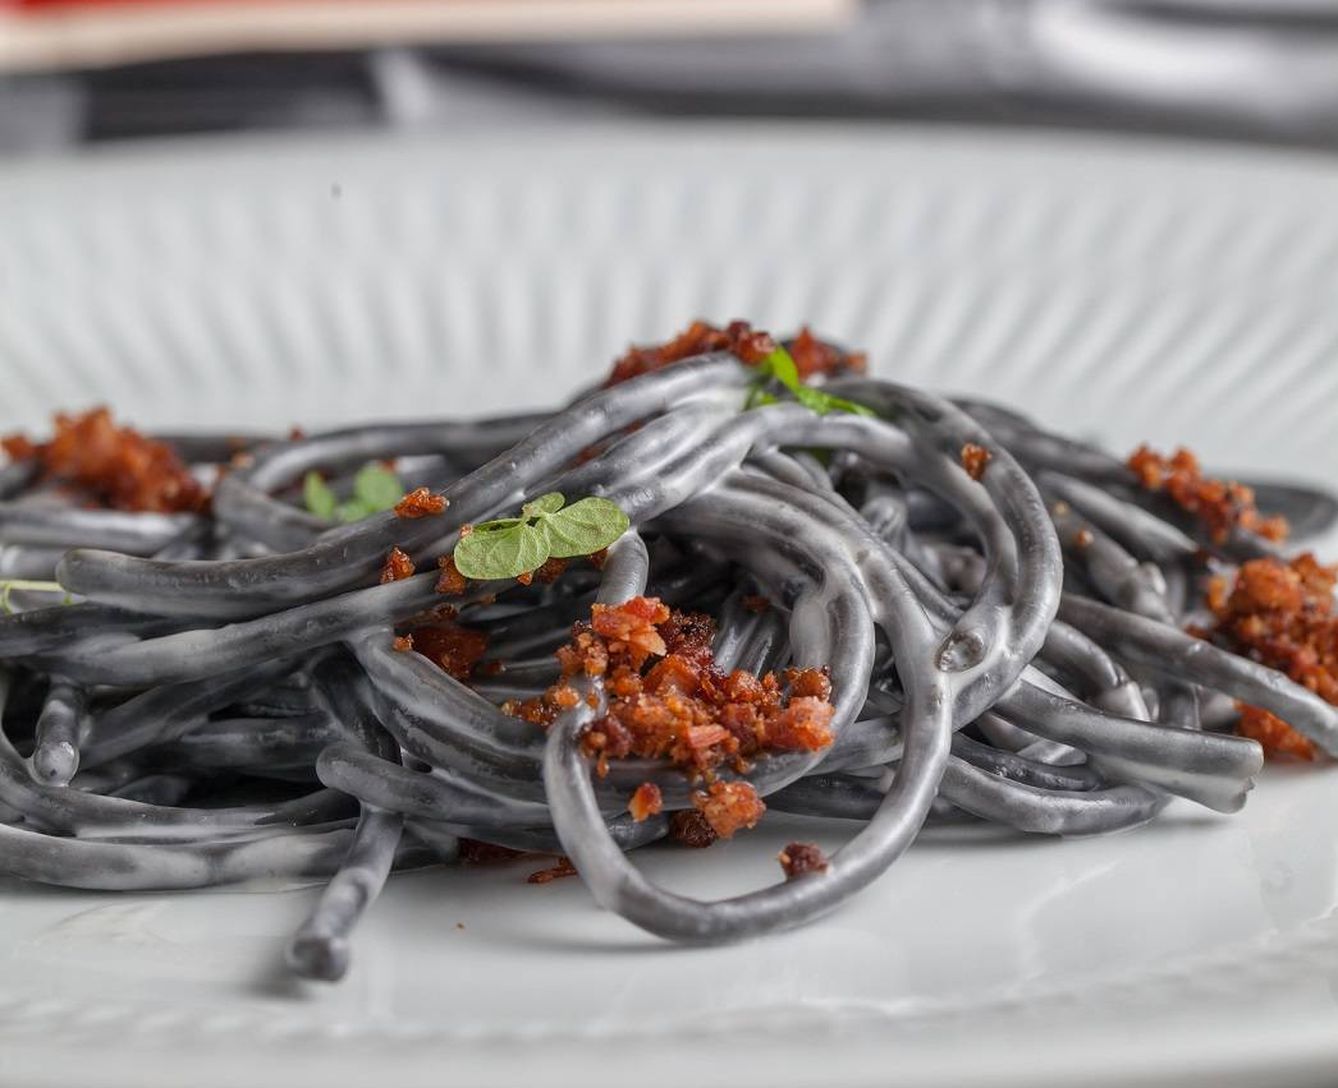 Spaghetti nero di seppia Garofalo a la carbonara de ostras, de Ángel León. (Massimiliano Polles)